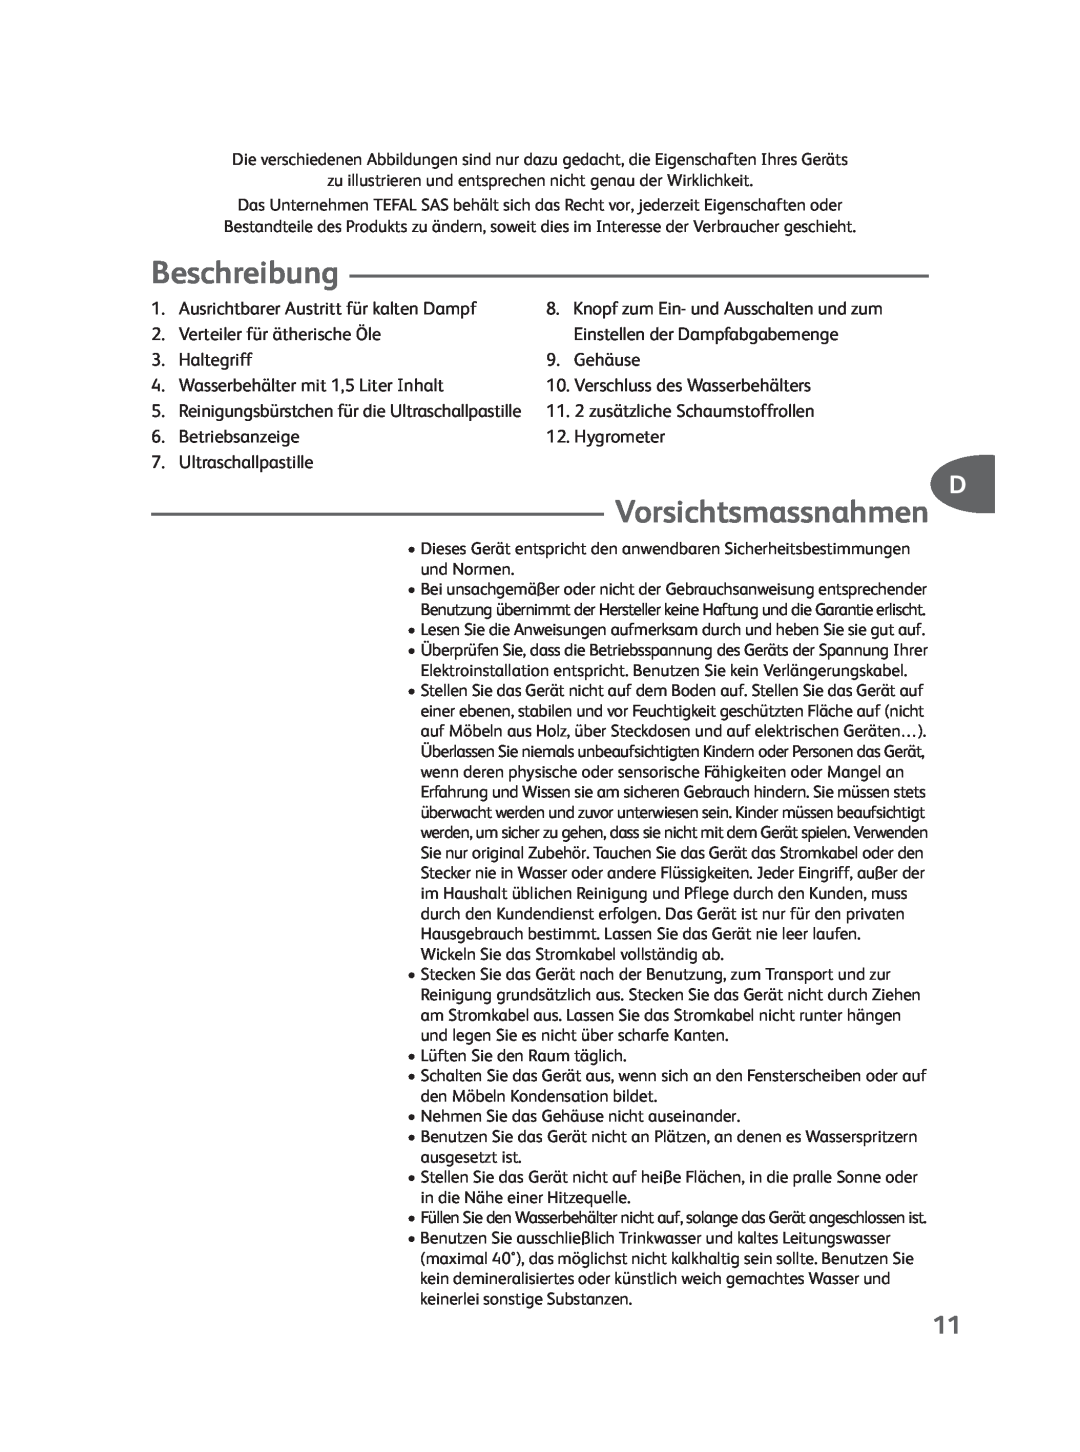 Groupe SEB USA - T-FAL Compact Humidifier manual Vorsichtsmassnahmen, Beschreibung 